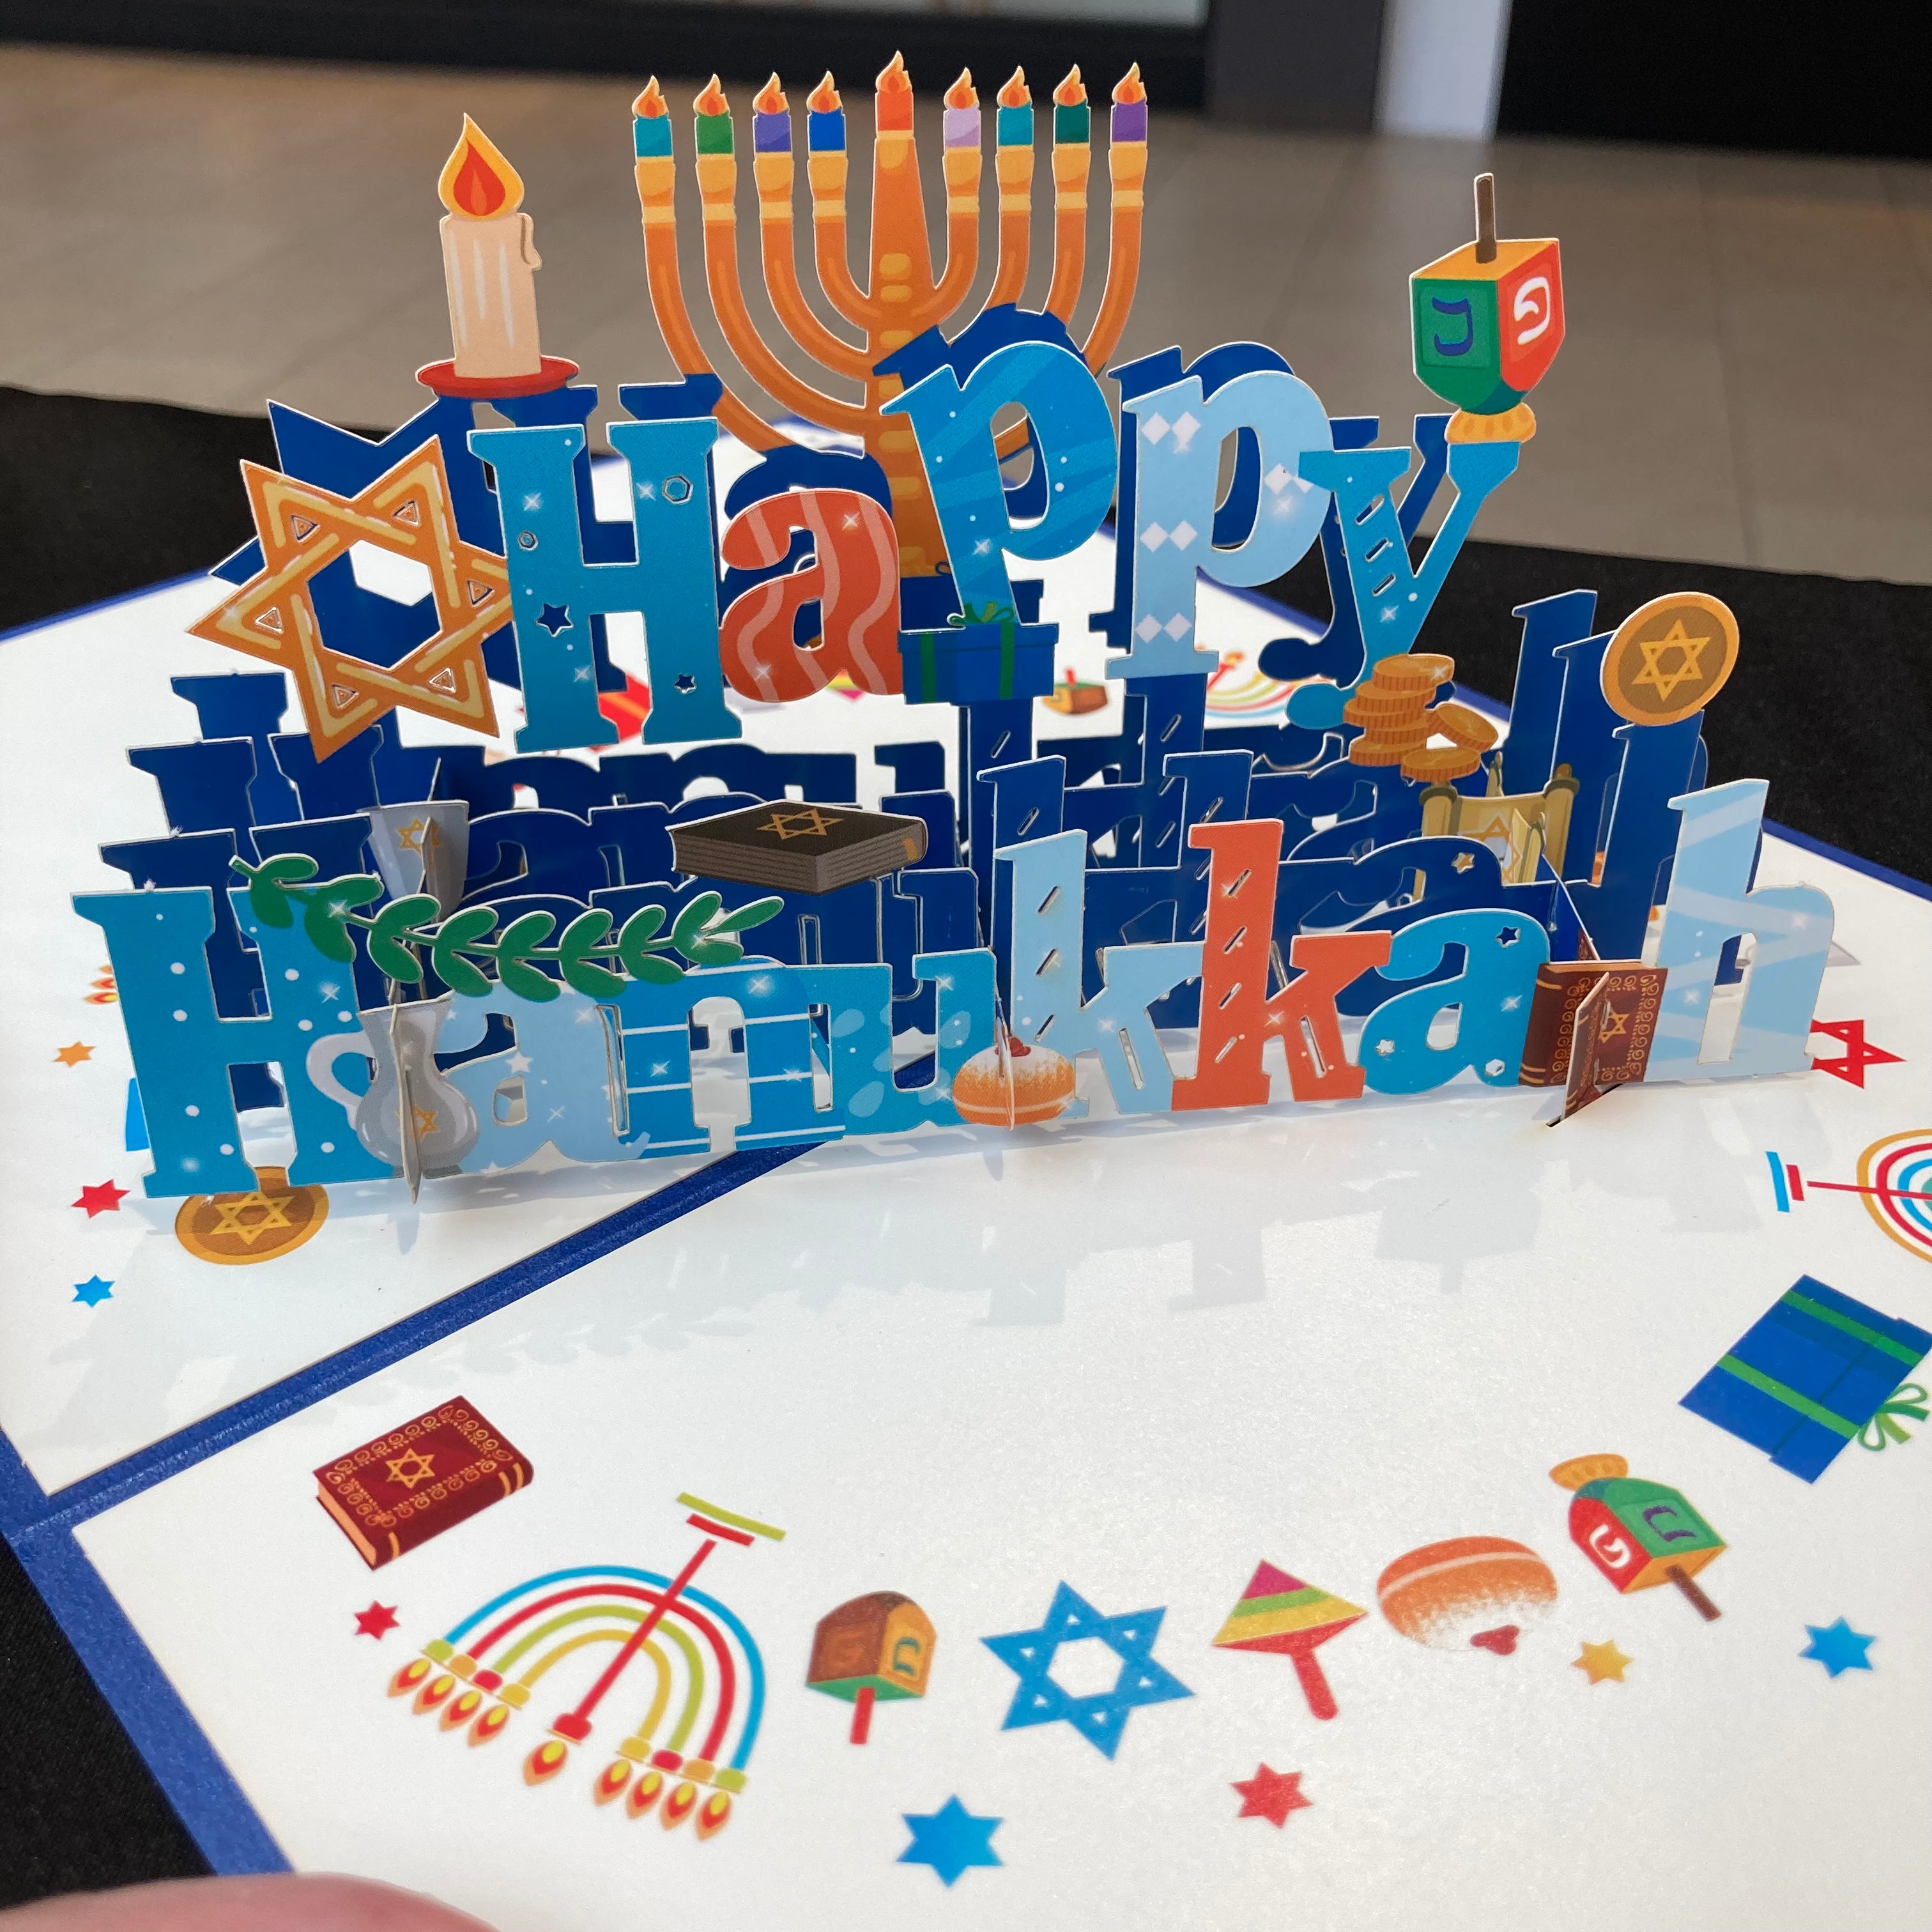 3D Holiday Cards - Hanukkah